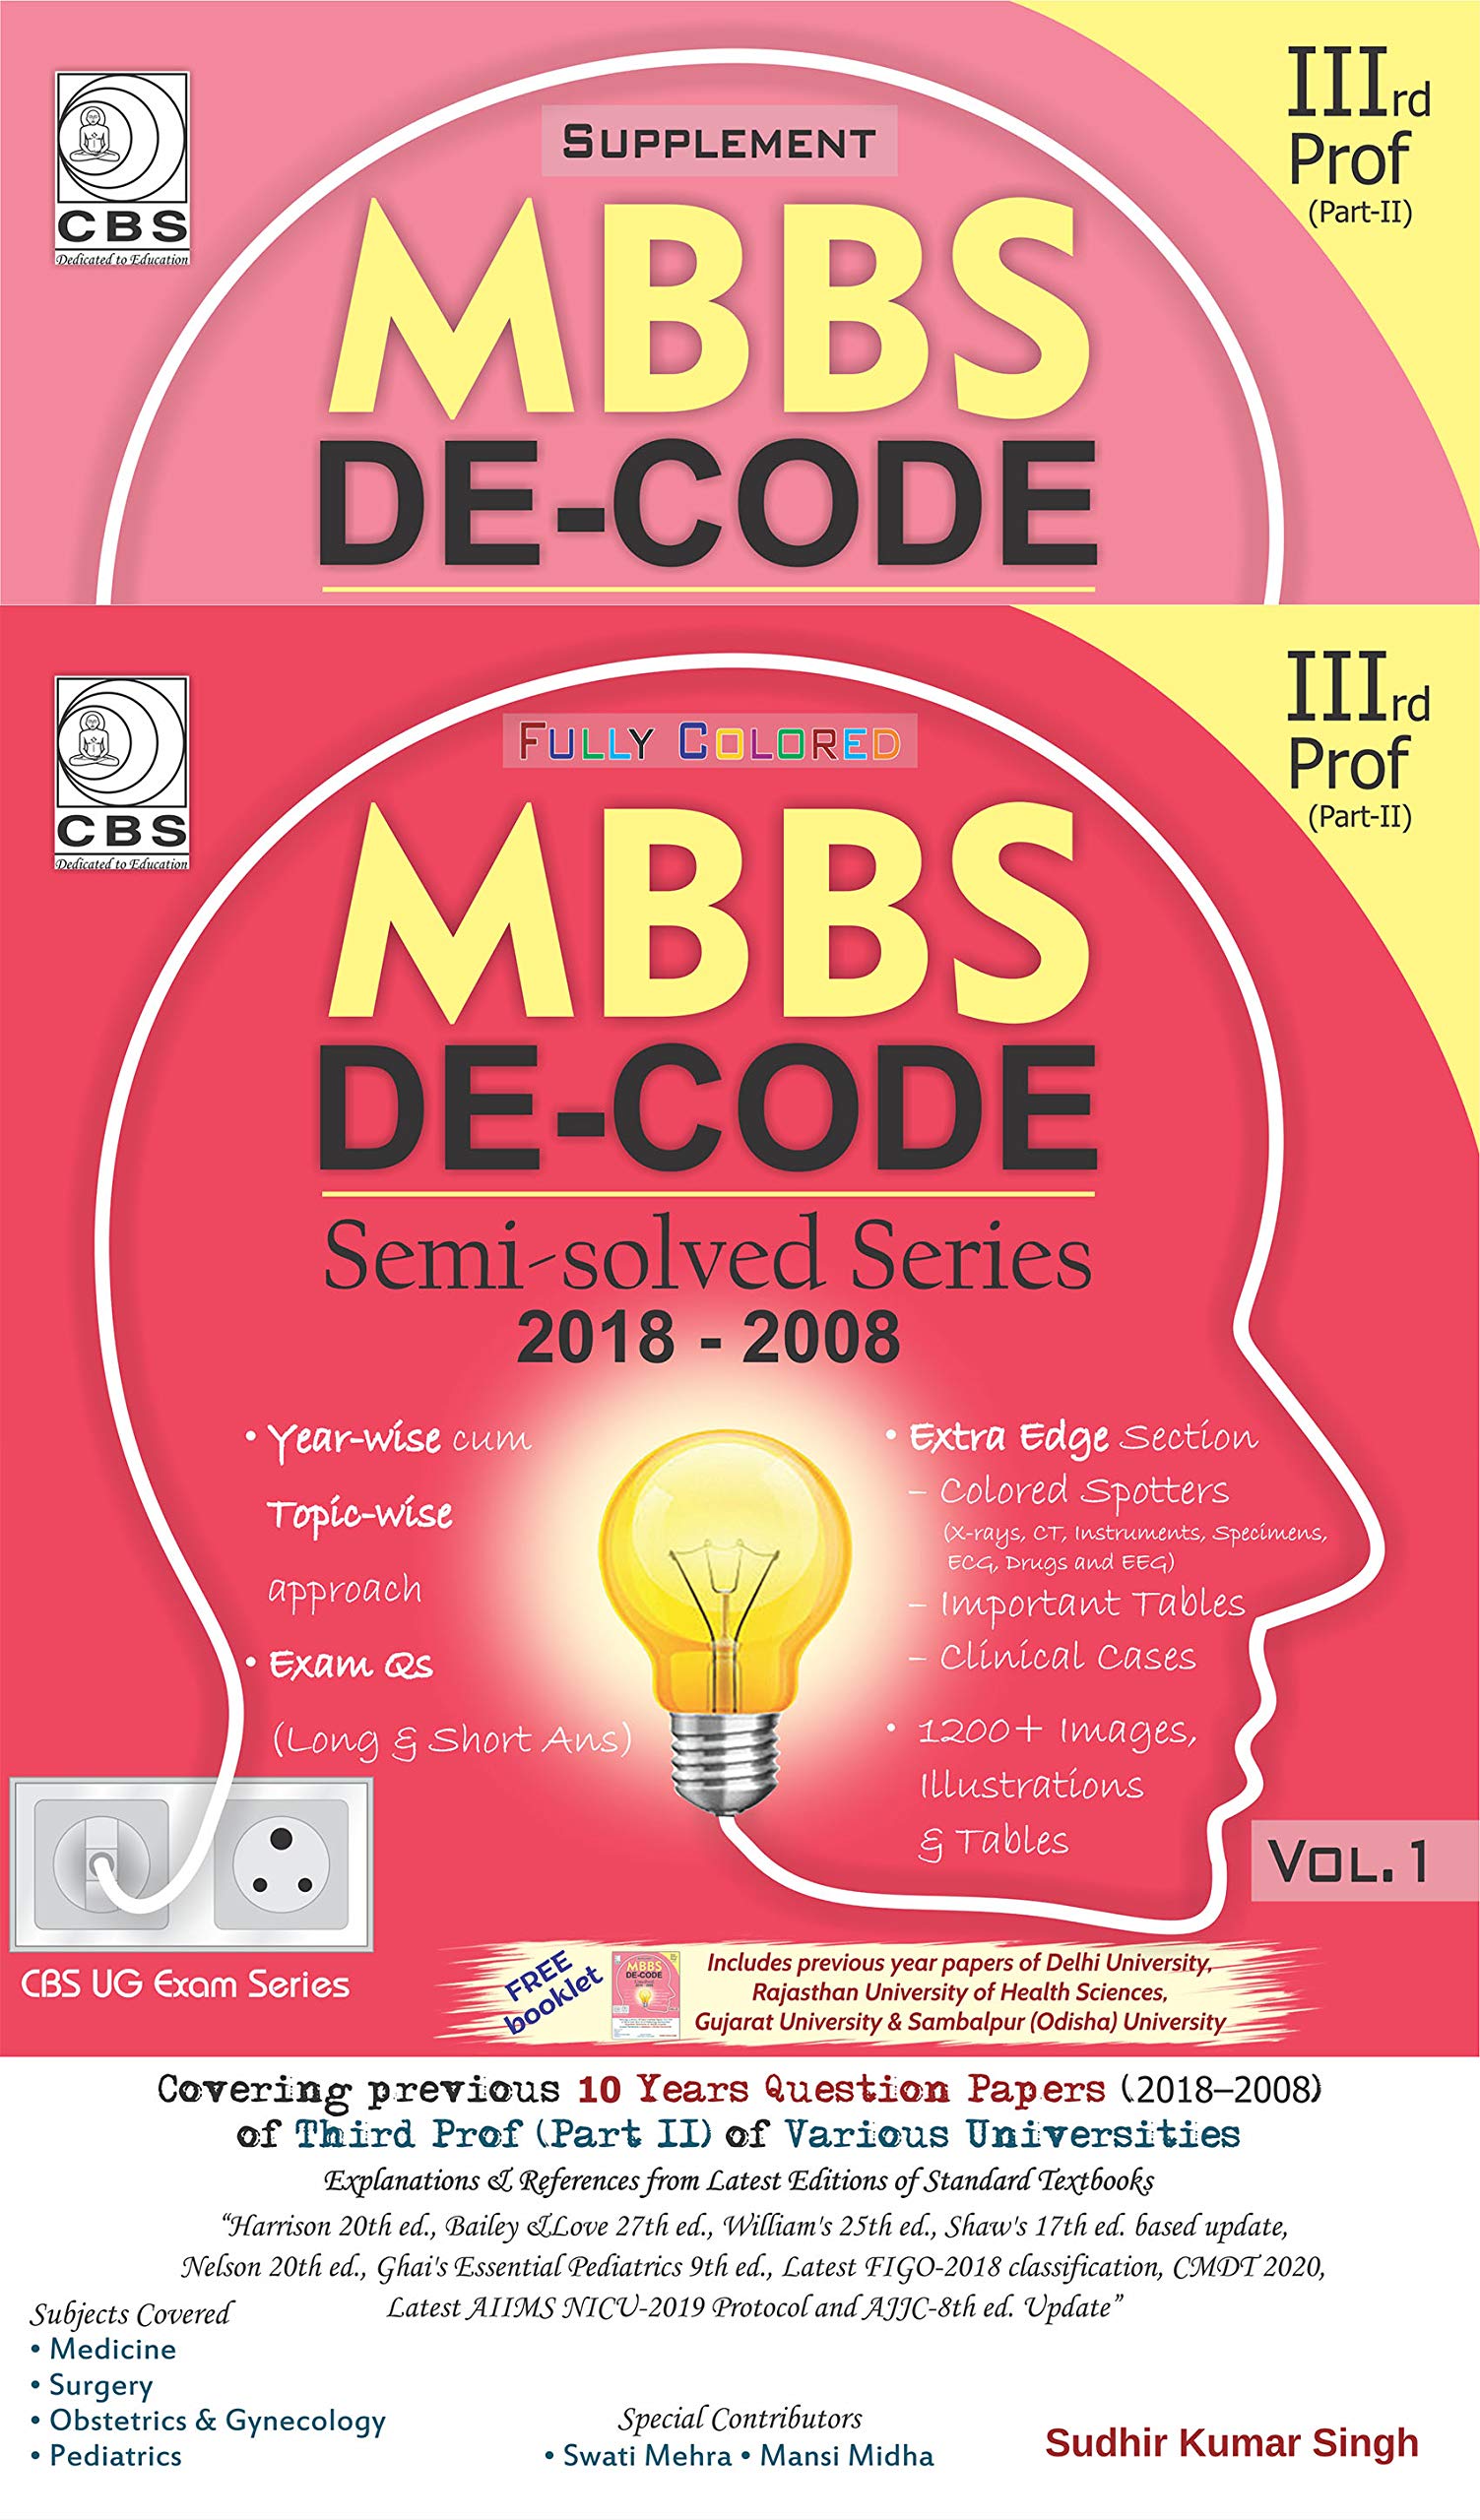 Mbbs De-Code Semi-Solved Series 2018-2008 With Suppliment, Iiird Prof, Part-2, 2 Vols. Set (Pb)